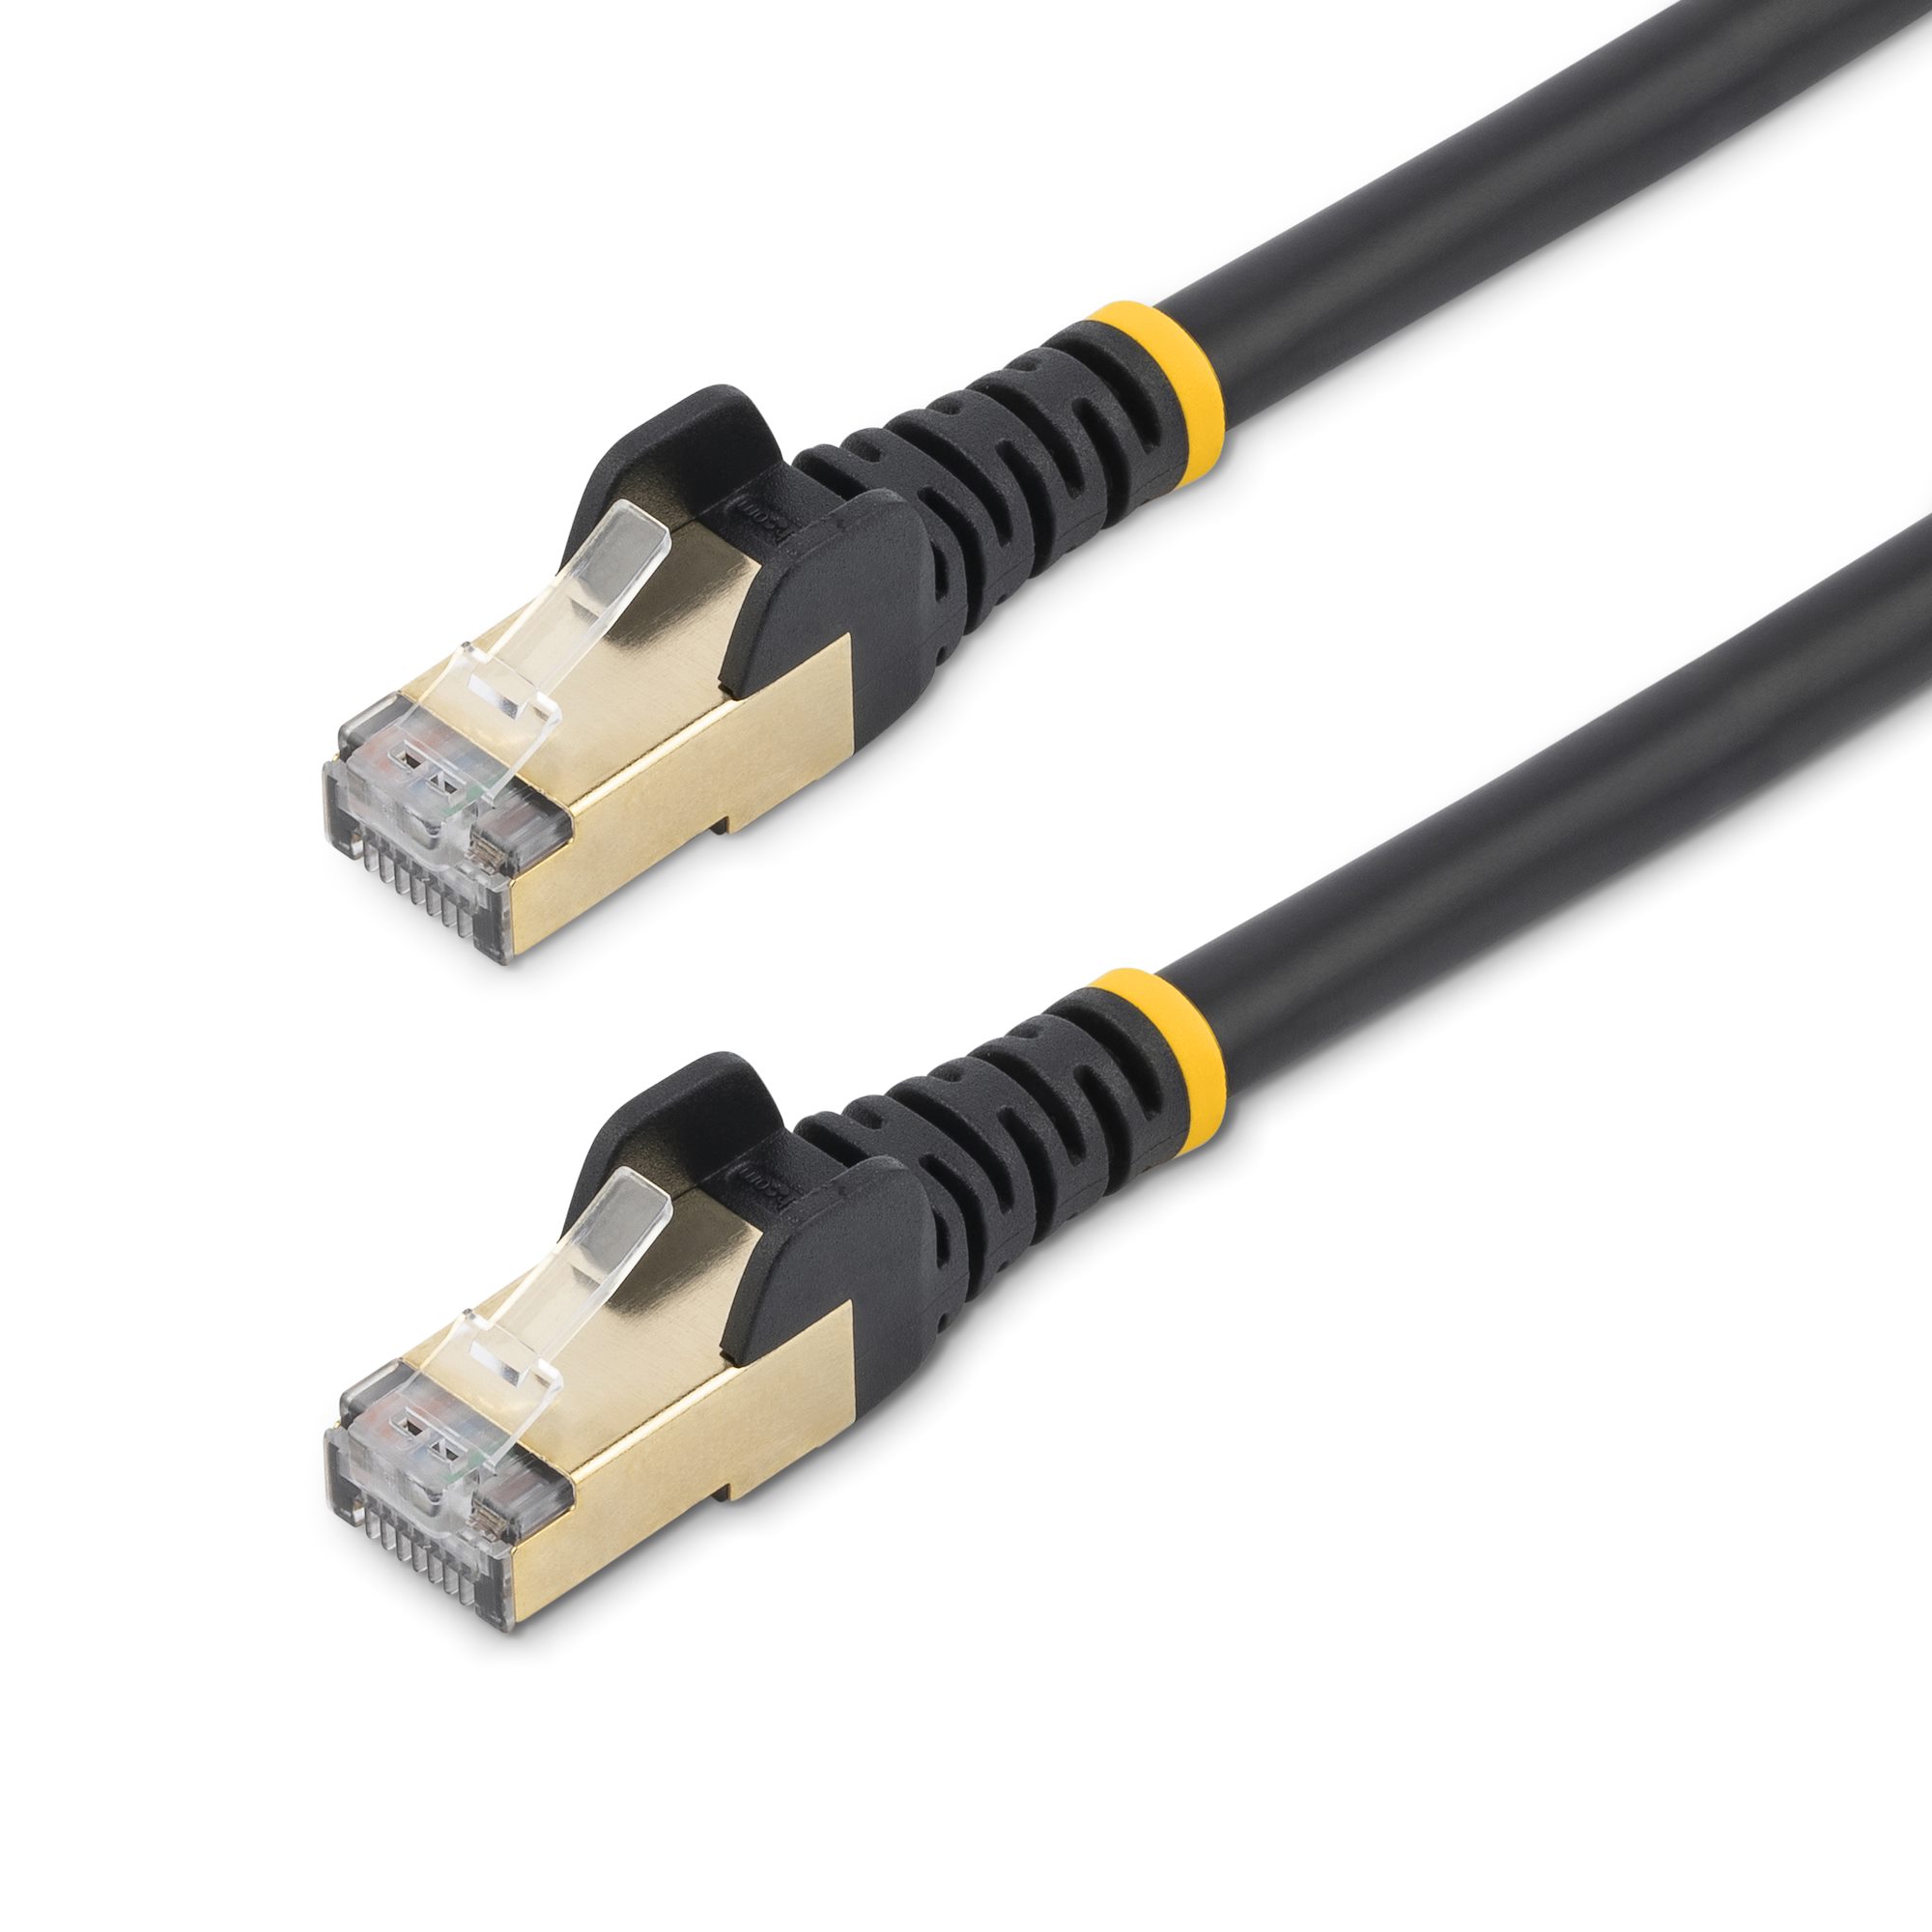 Raadplegen schakelaar Mooie vrouw 10 m CAT6a Ethernet Cable - STP Black (6ASPAT10MBK) - Cat 6a Cables |  StarTech.com Spain